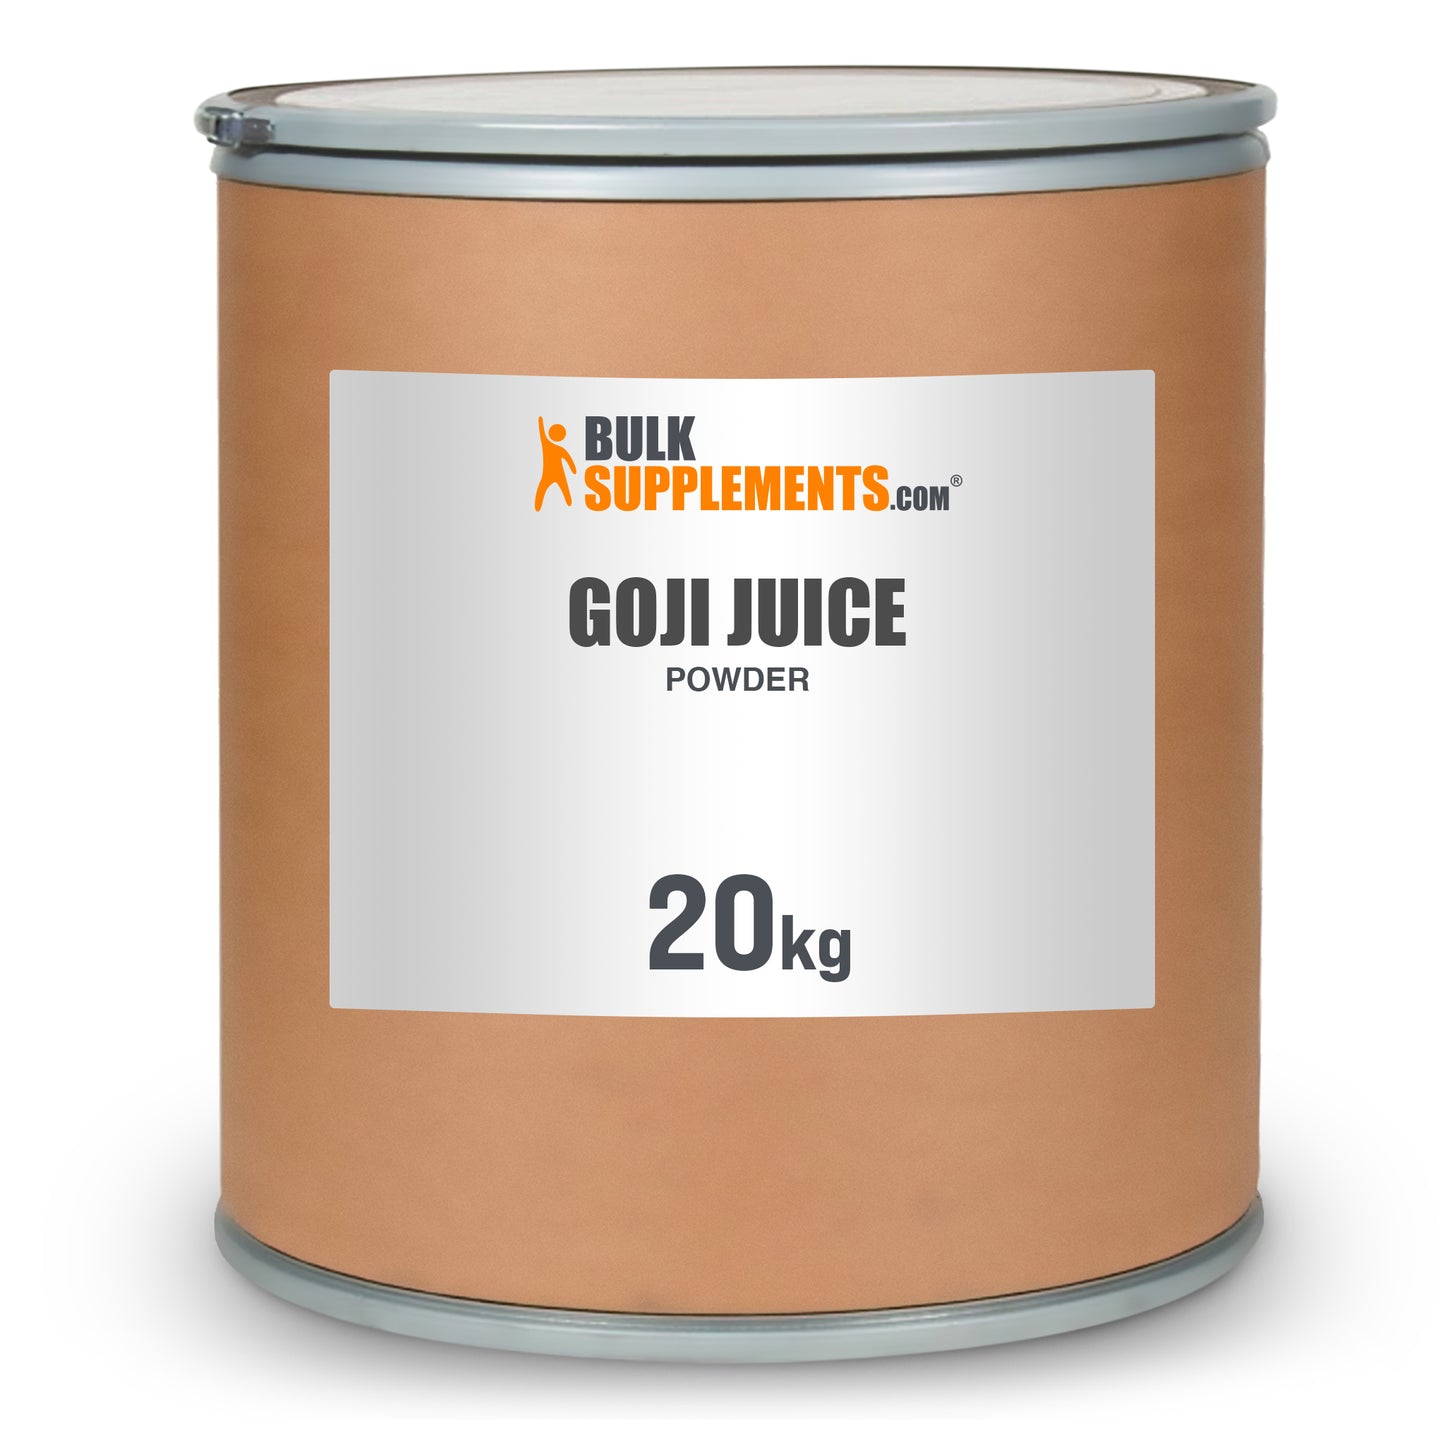 Goji Juice Powder 20kg barrel image